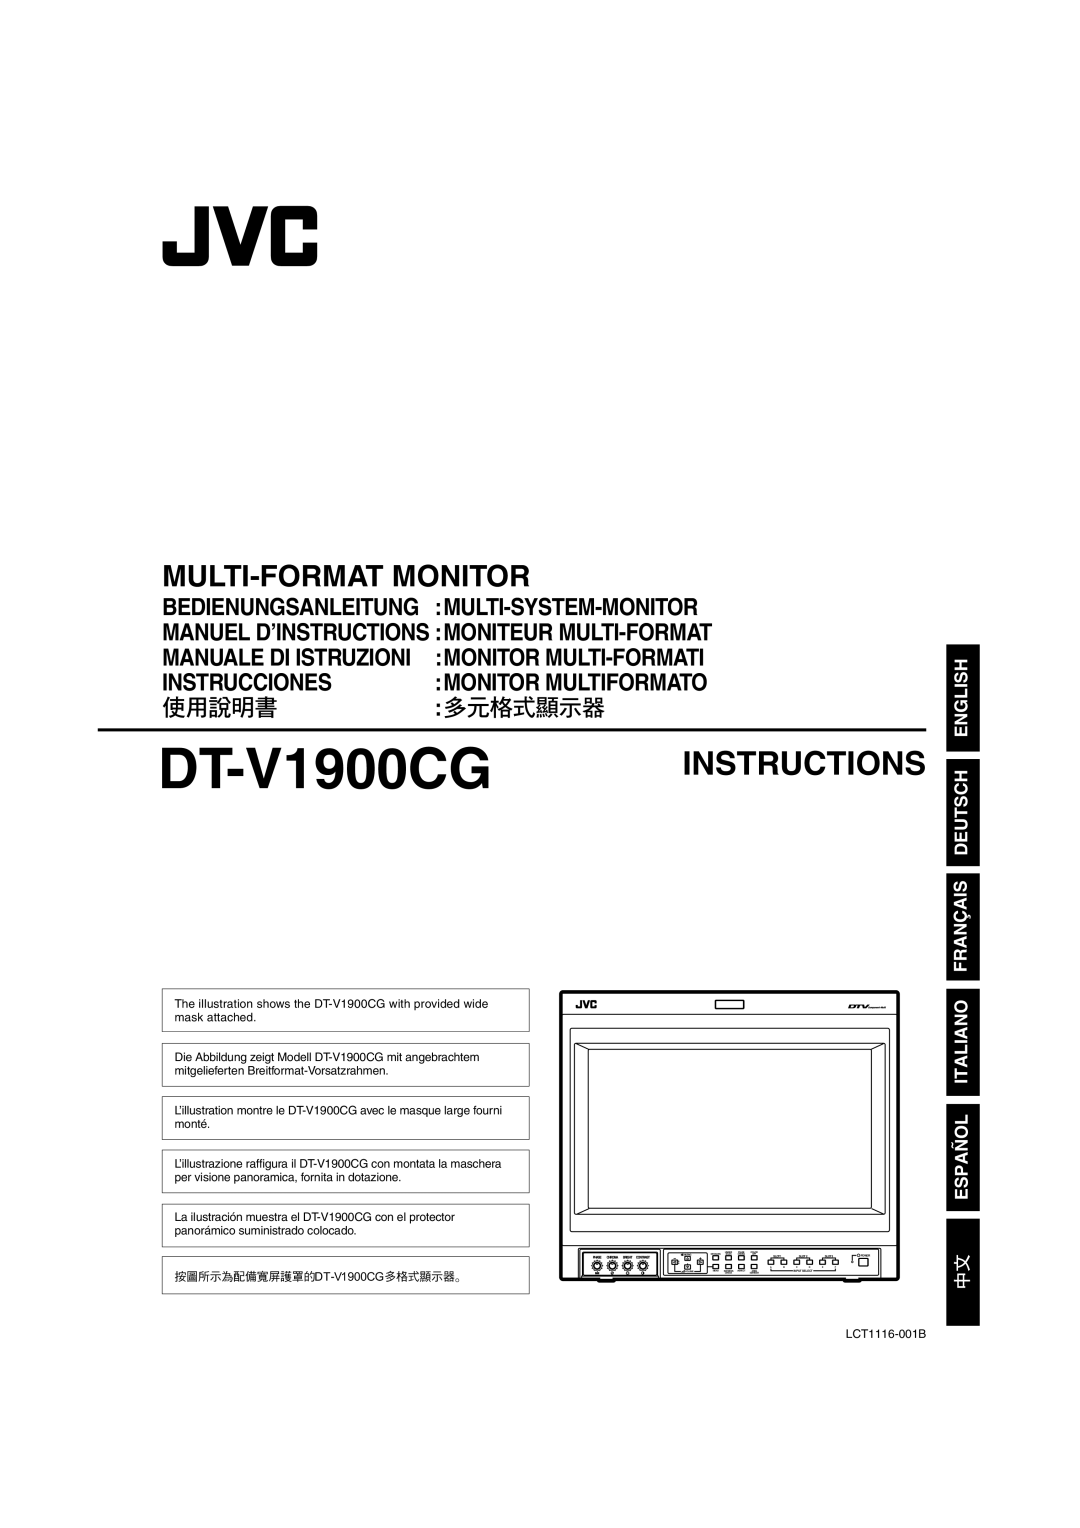 JVC manual Multi-Format Monitor, Manuale Di Istruzioni, DT-V1900CG INSTRUCTIONS, Instrucciones, Multi-System-Monitor 